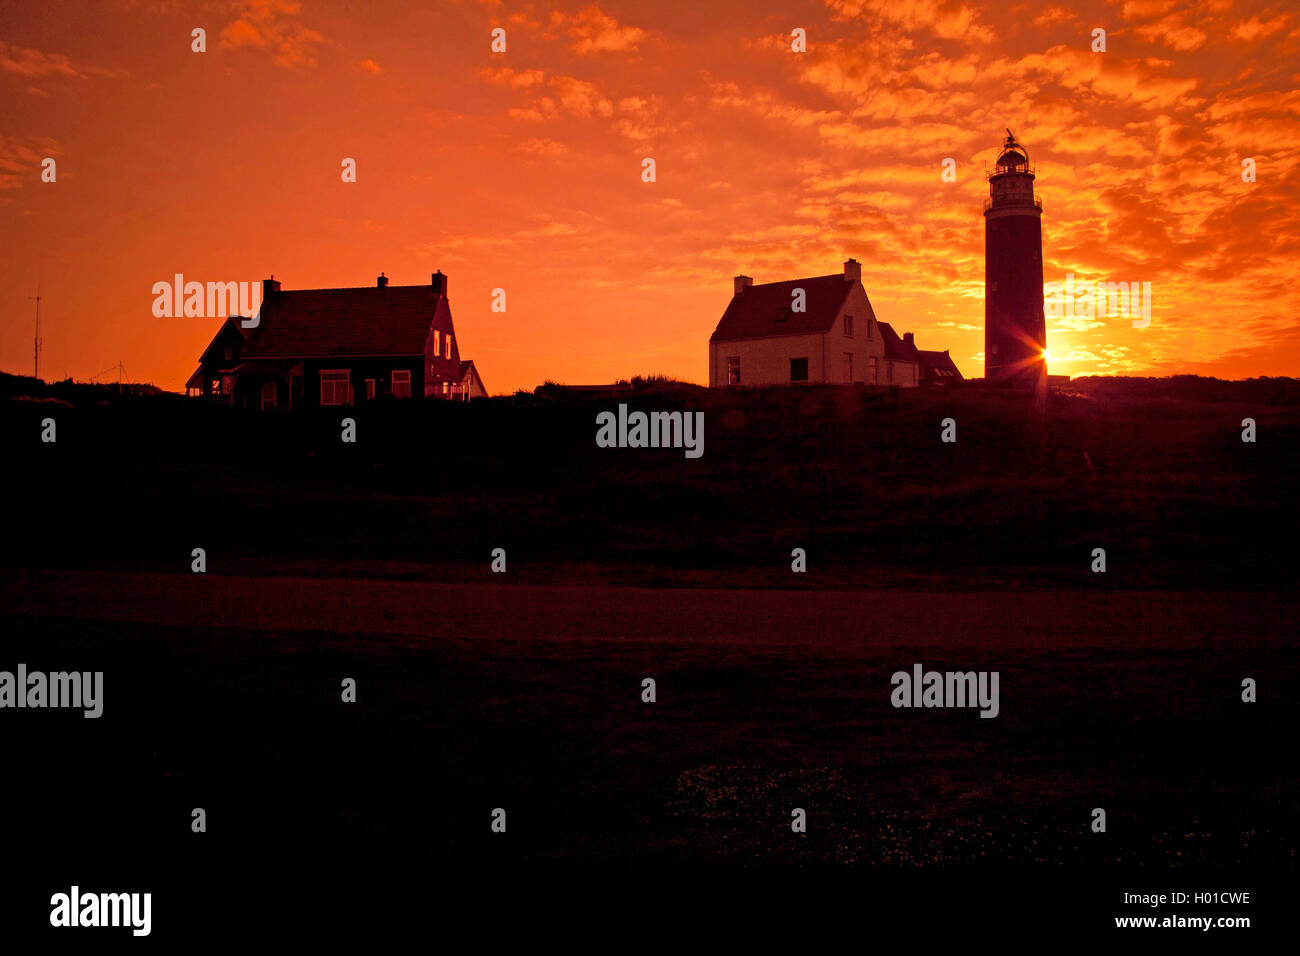 lighthouse Vuurtoren at sunset, Netherlands, Texel Stock Photo